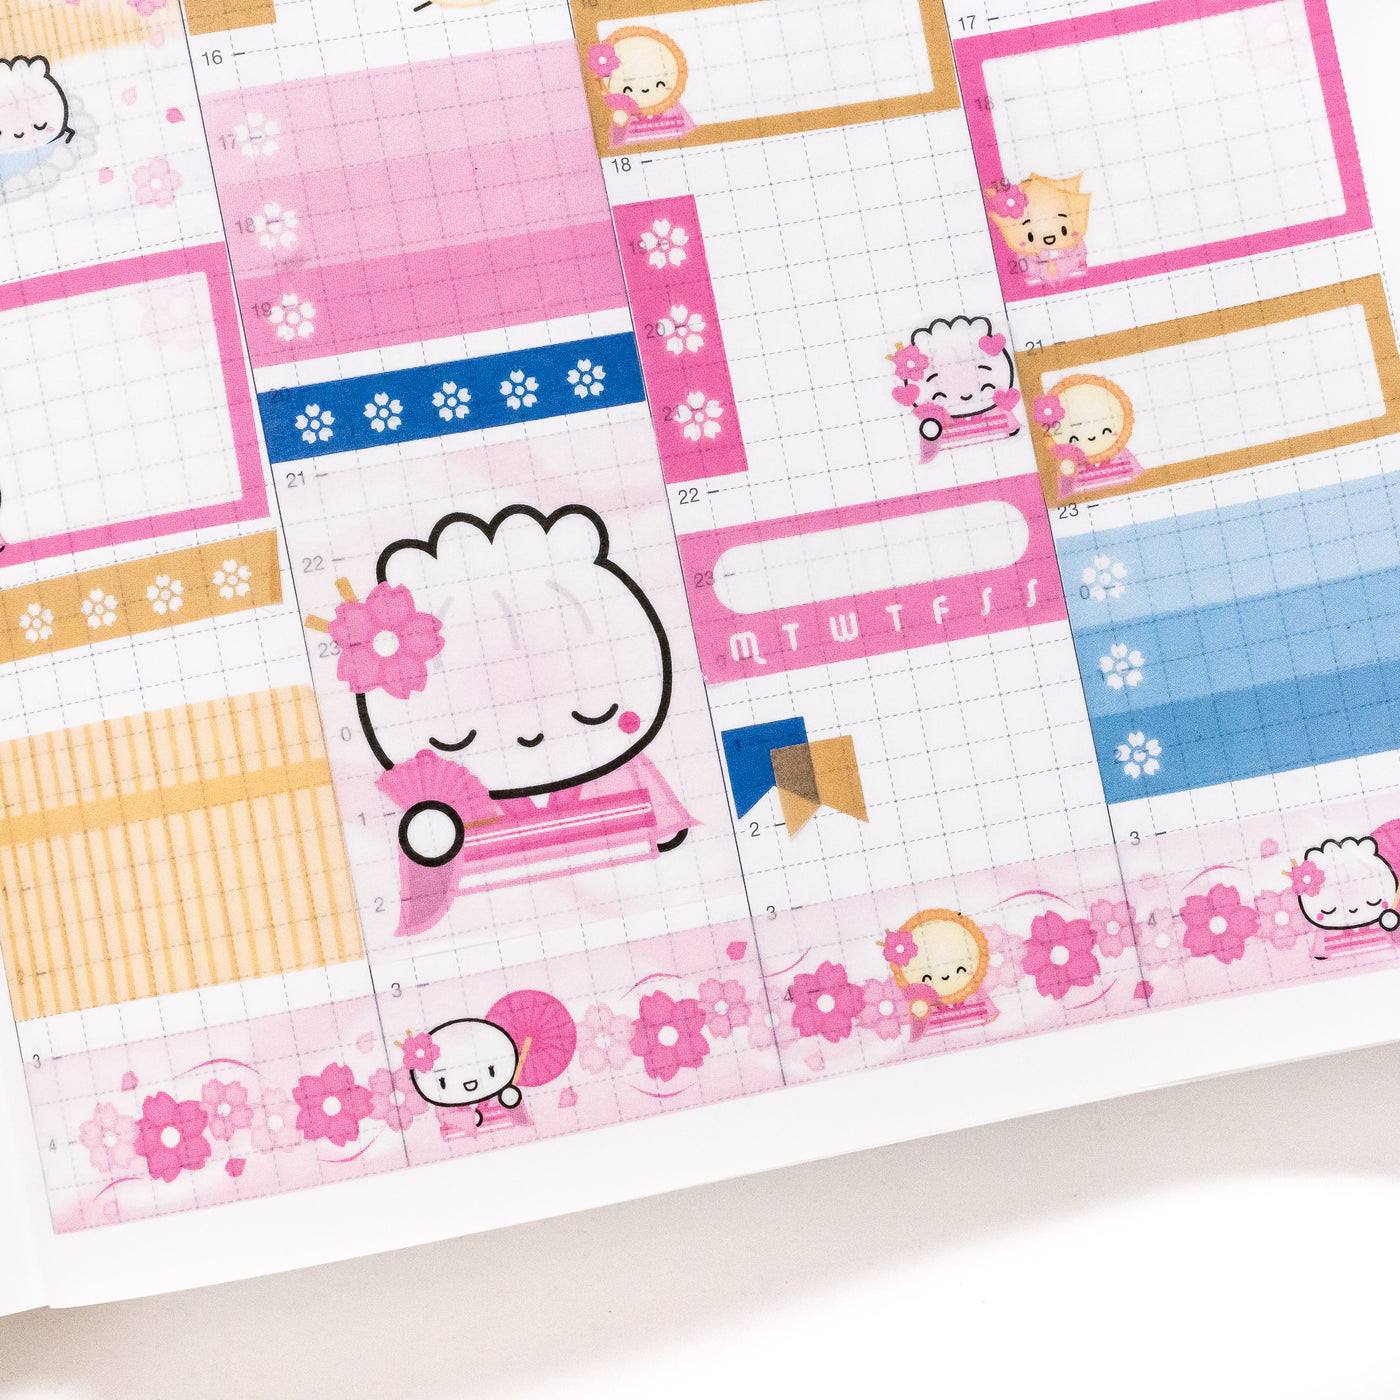 HCSK050 | Sakura Weekly Sticker Kit (Hobonichi Cousin)